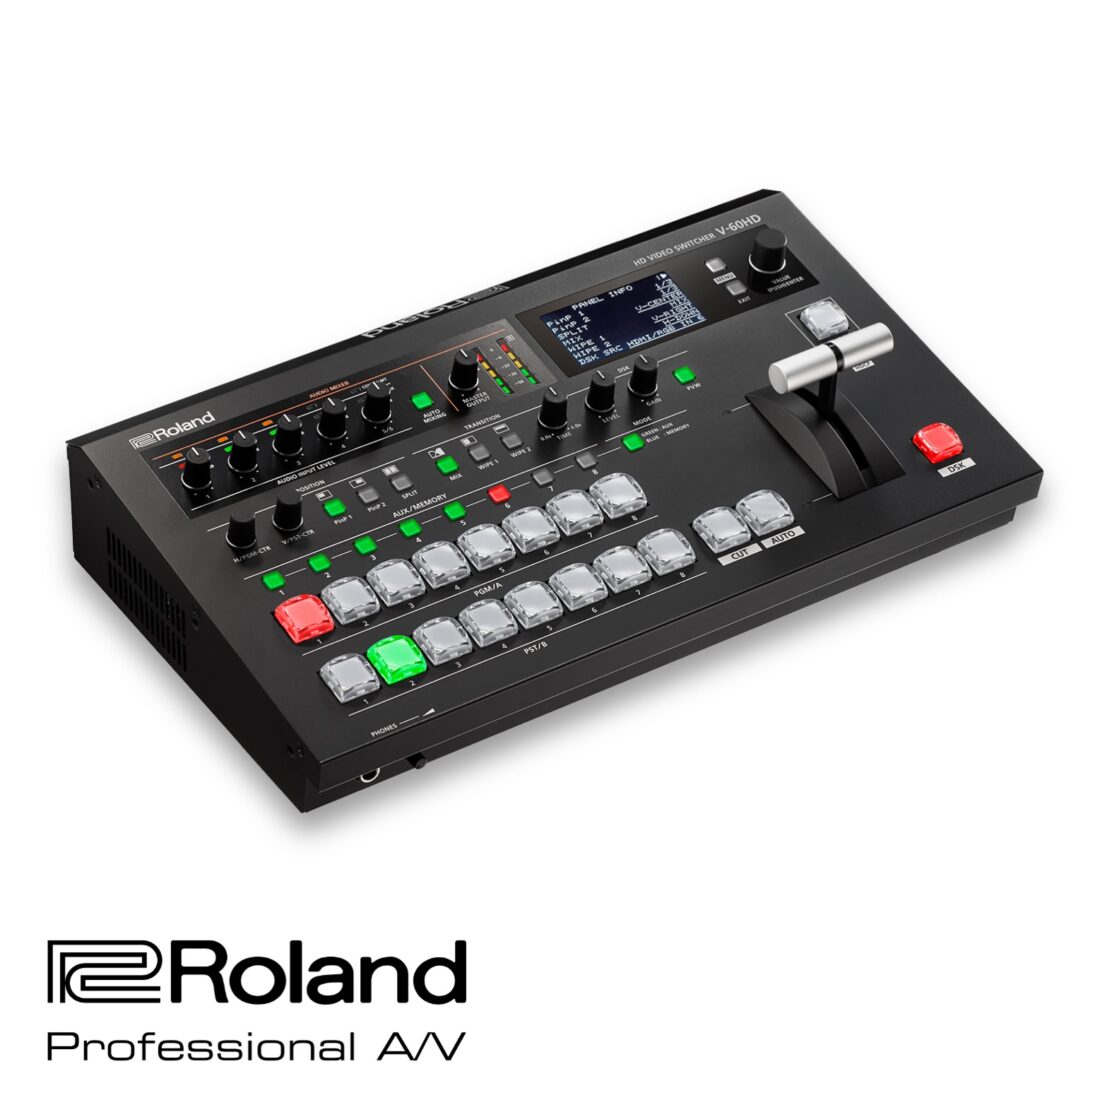 Roland V-60HD